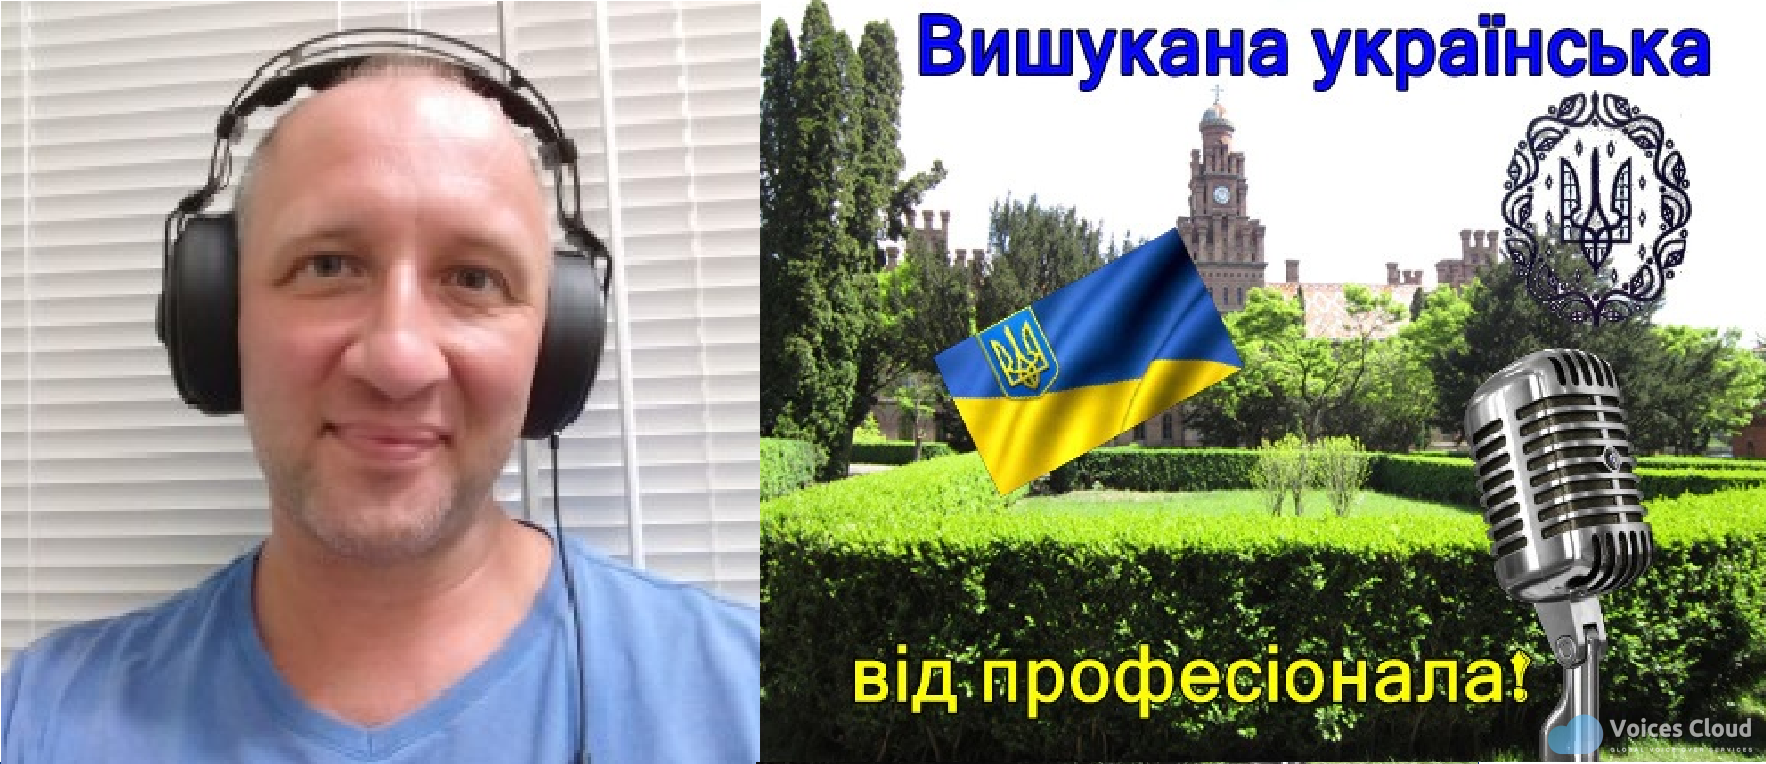 15231Ukrainian Voice Over